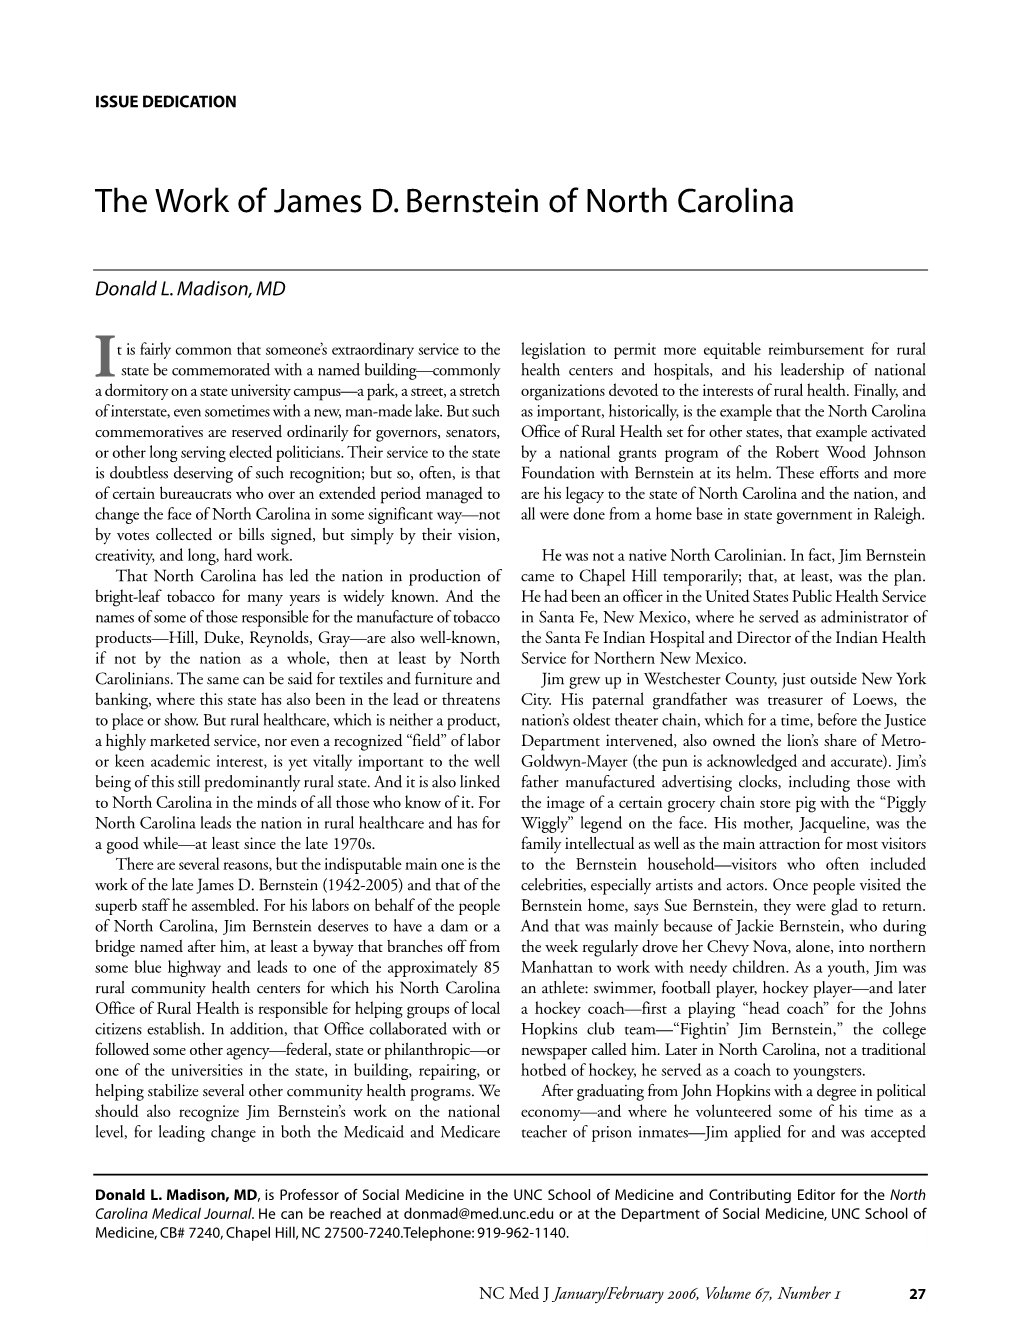 The Work of James D. Bernstein of North Carolina